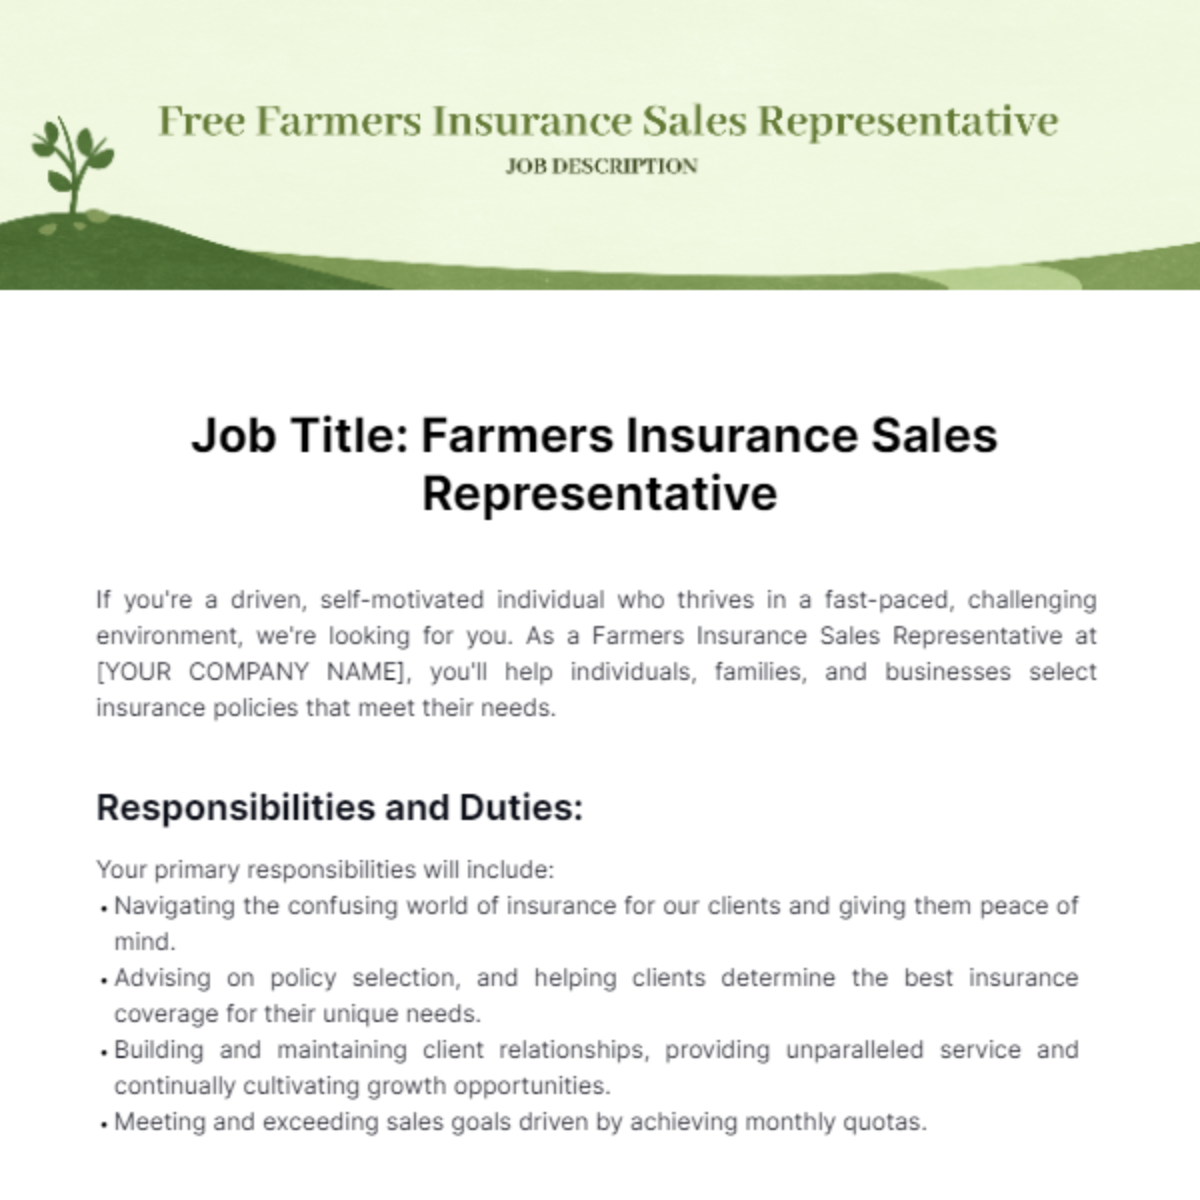 Free Farmers Insurance Sales Representative Job Description Template